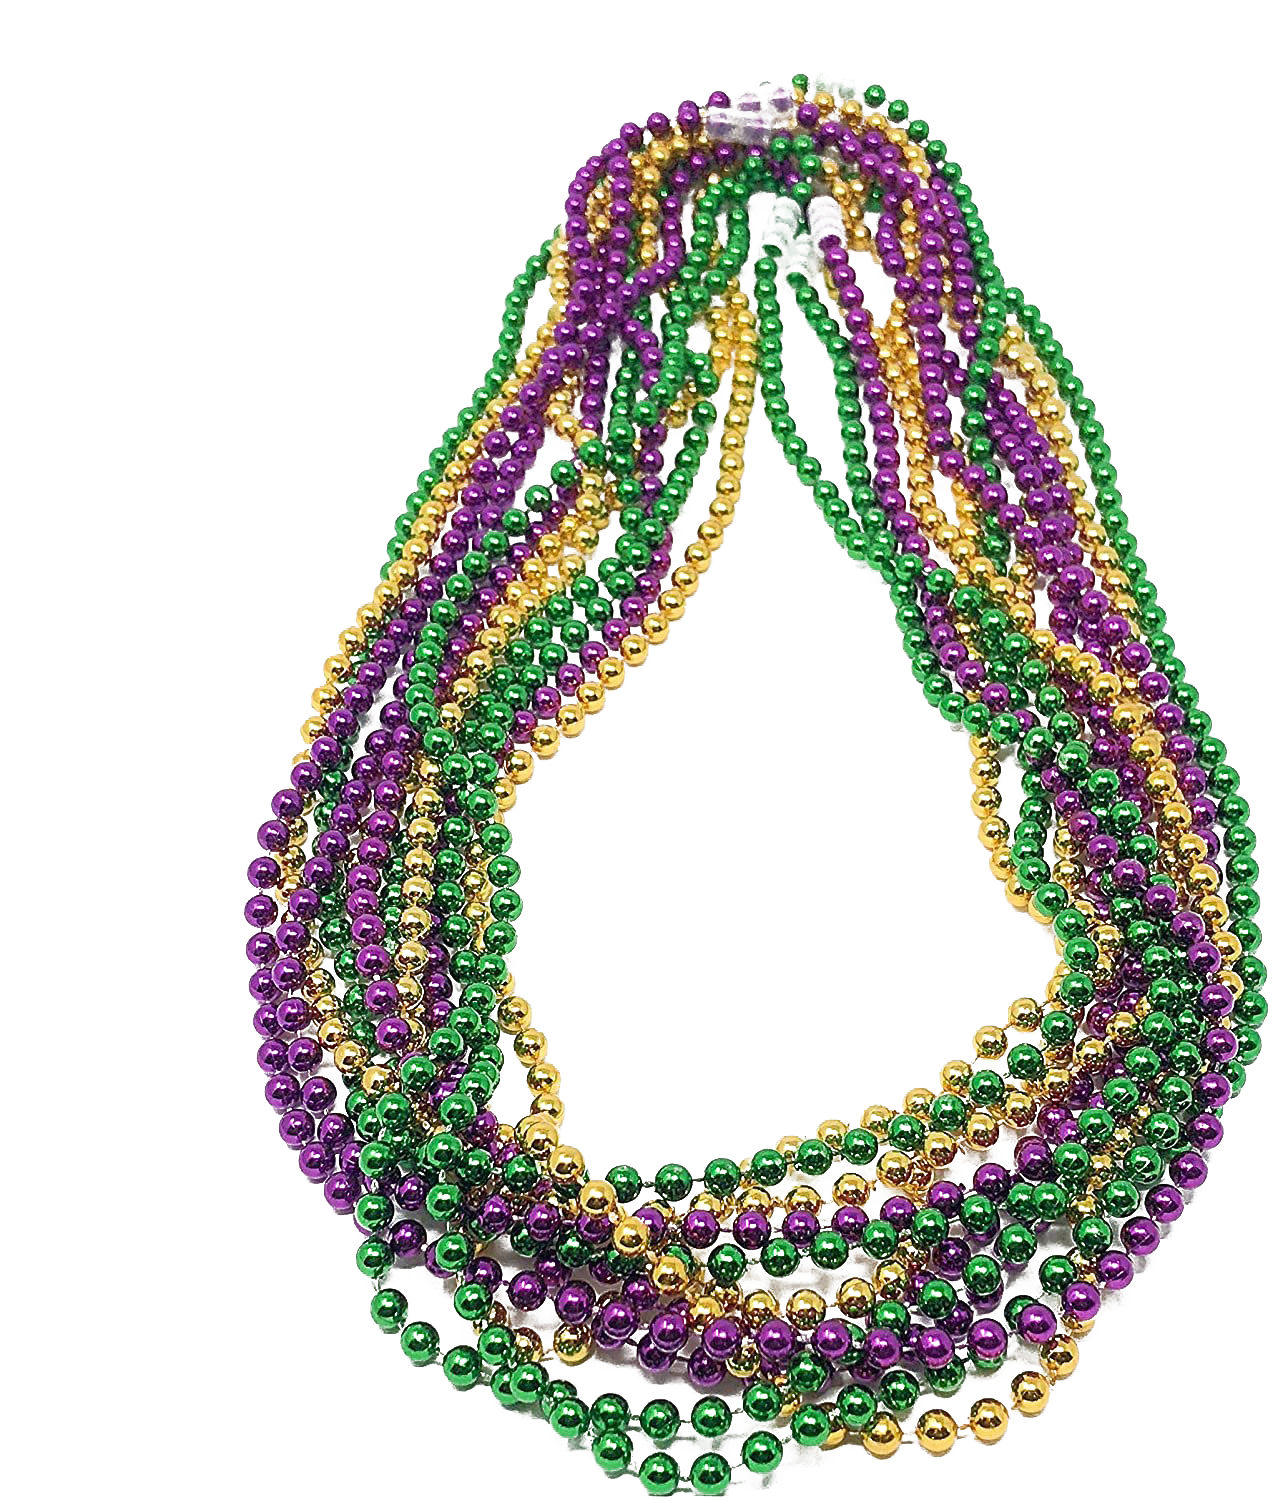 Mardi Gras Beads PNG High-Quality Image